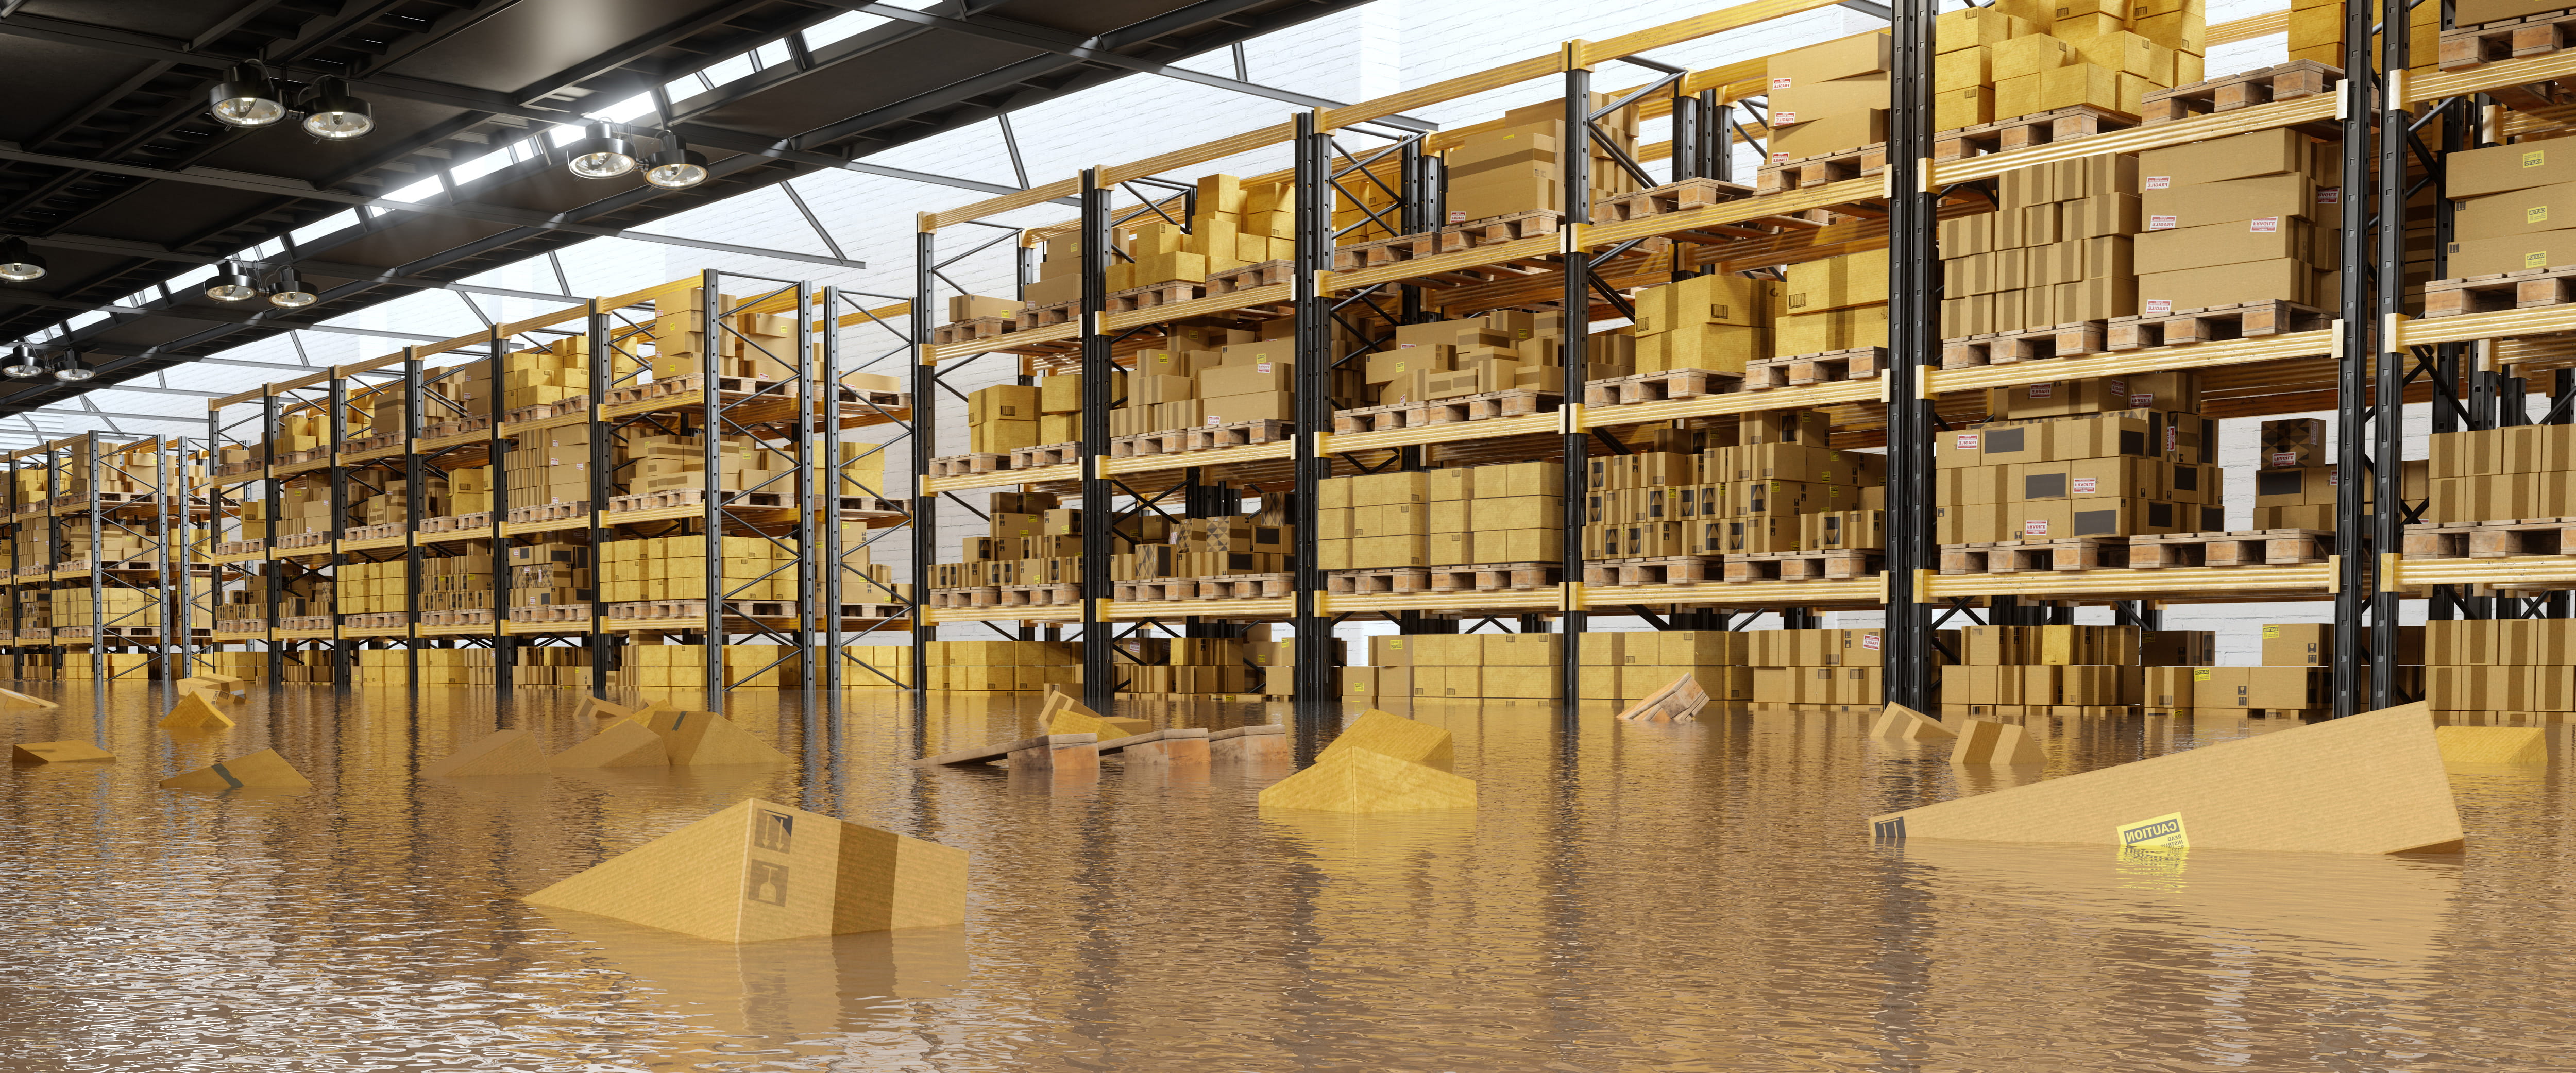 Flood risks to businesses